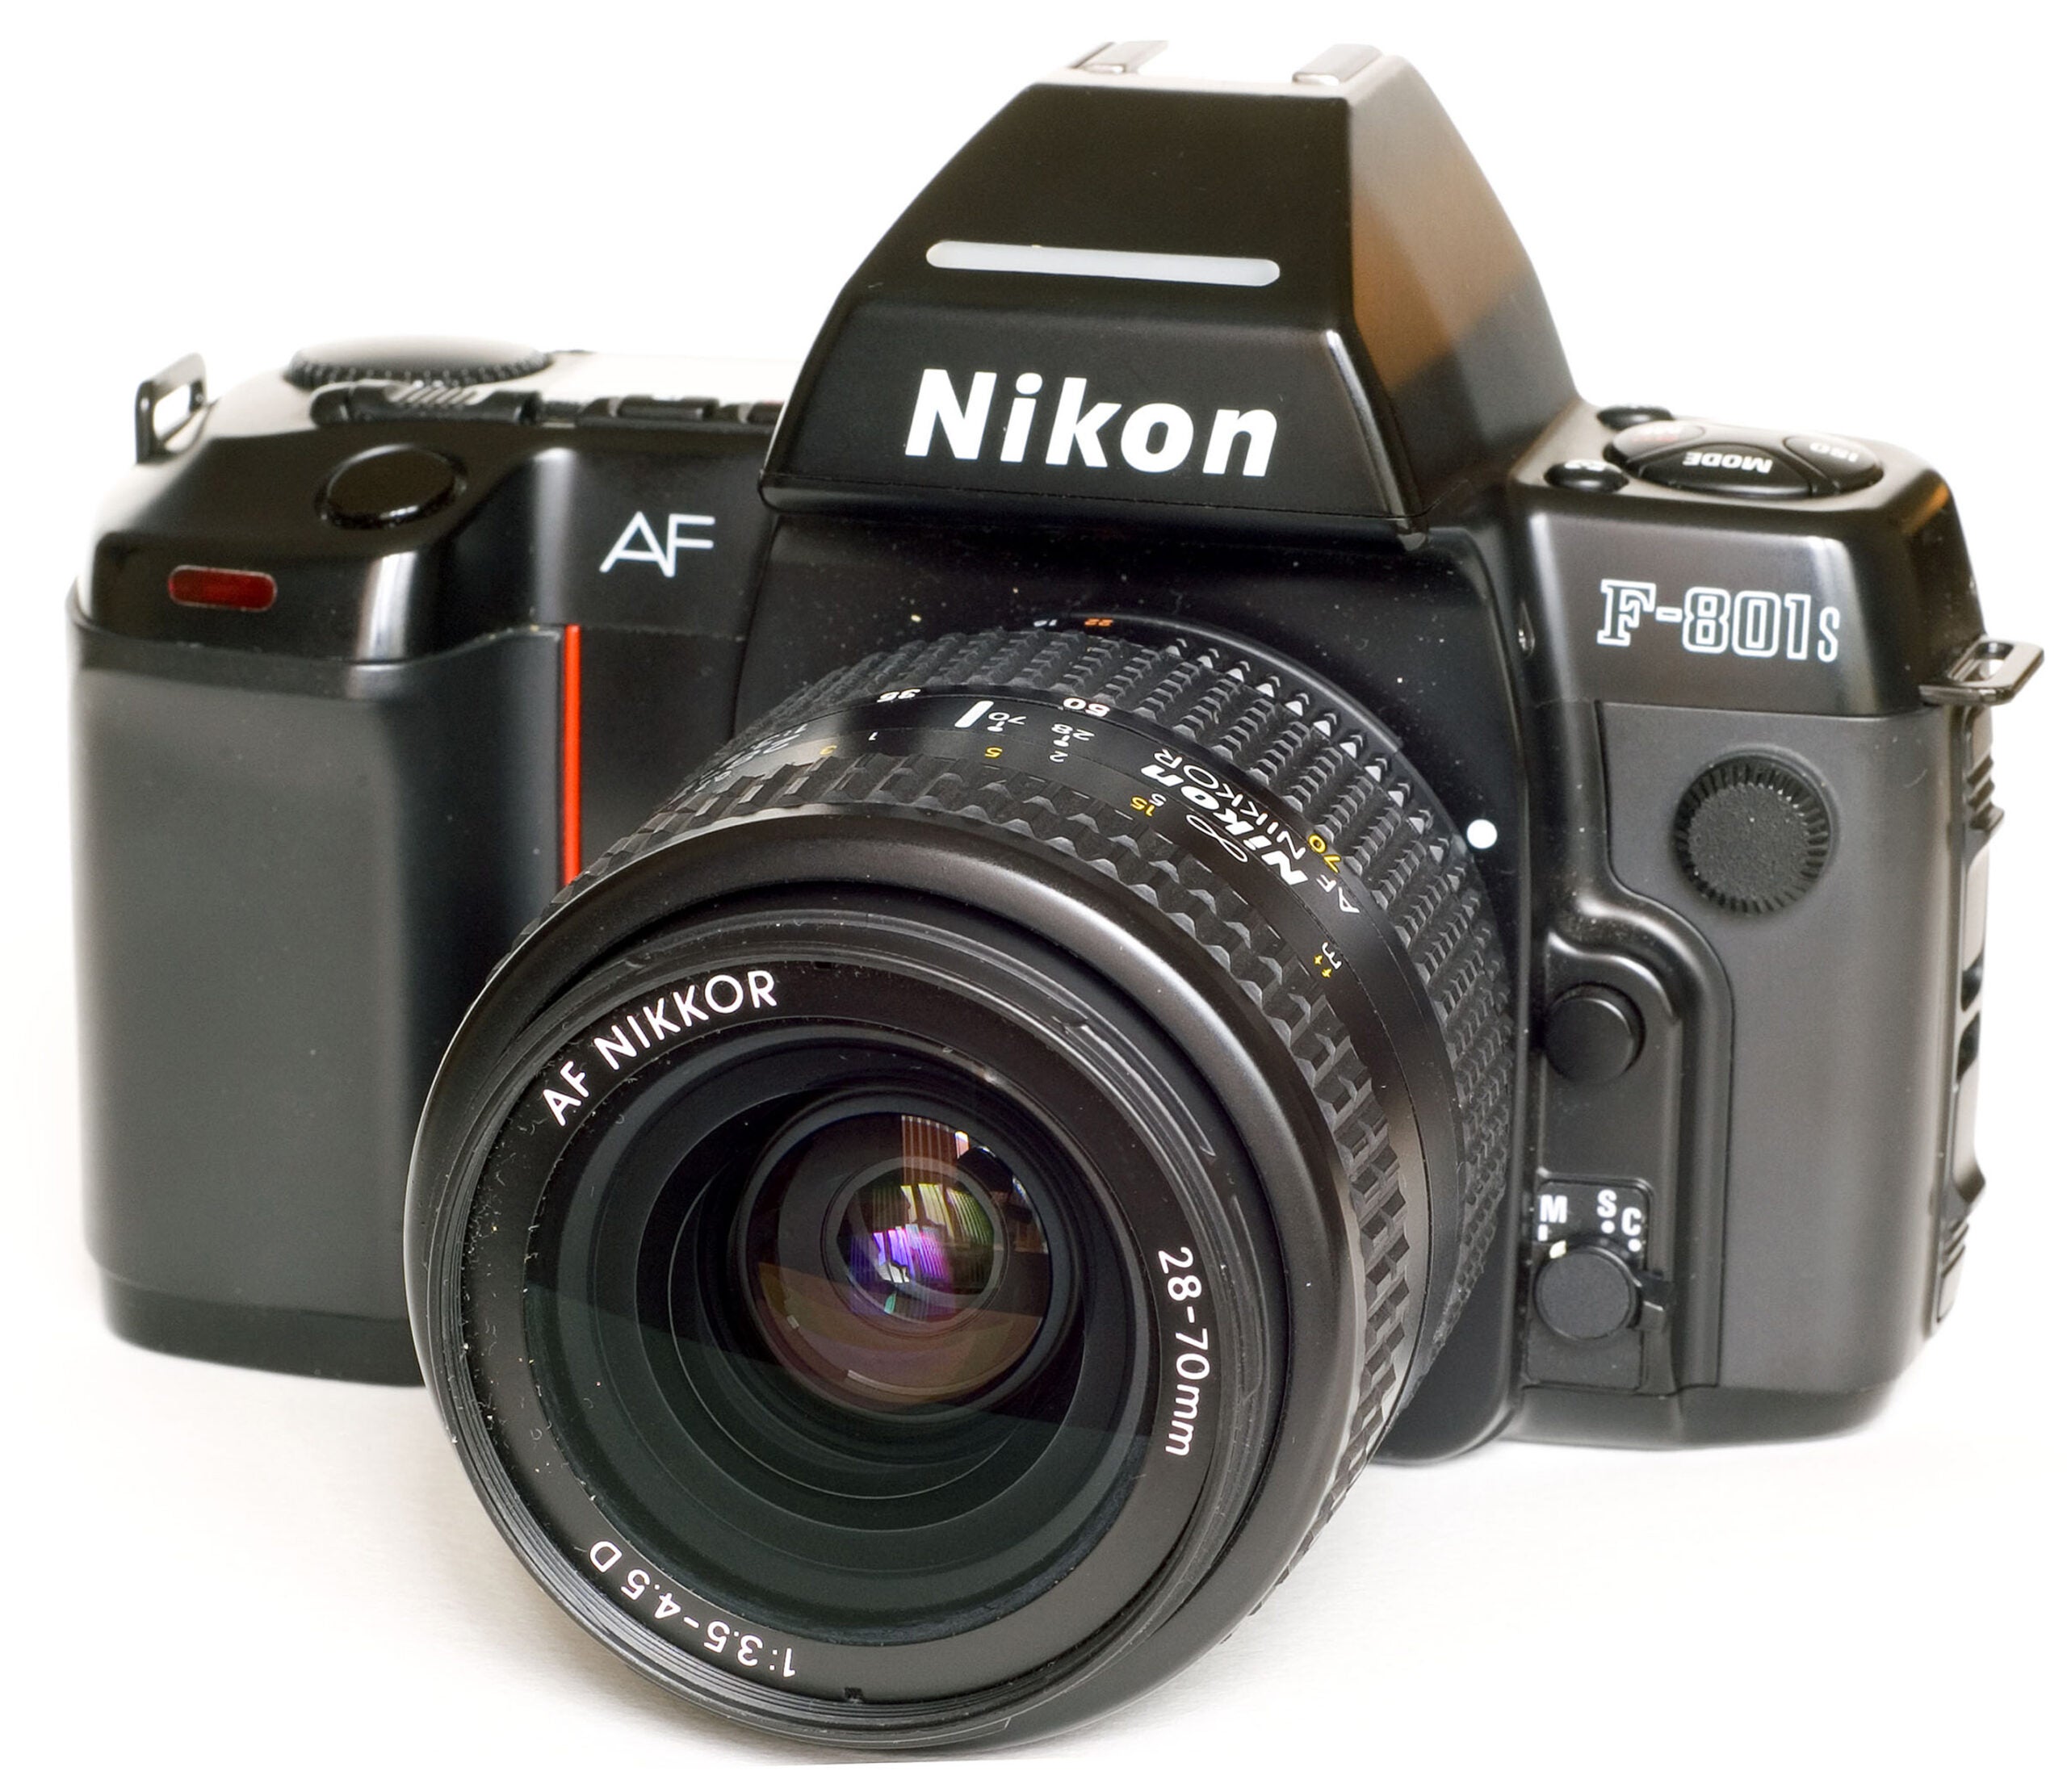 The Nikon F-801s